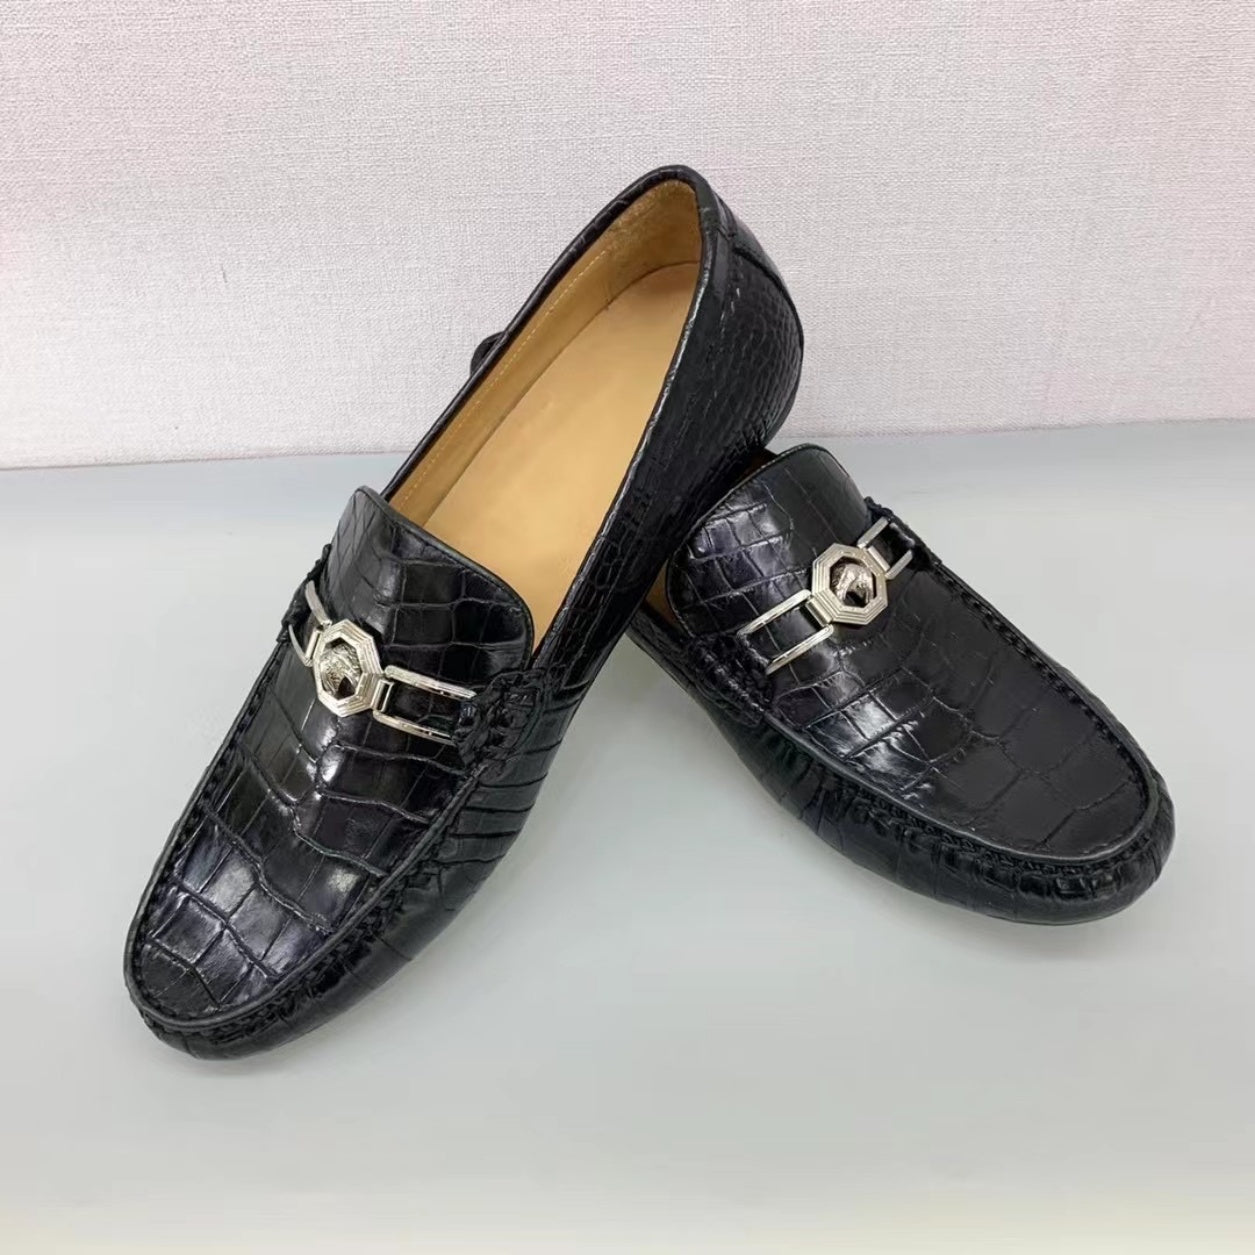 Men's Shoes Genuine Crocodile Alligator Skin Leather Handmade Black, Brown Size 7 - Size 11US #8692